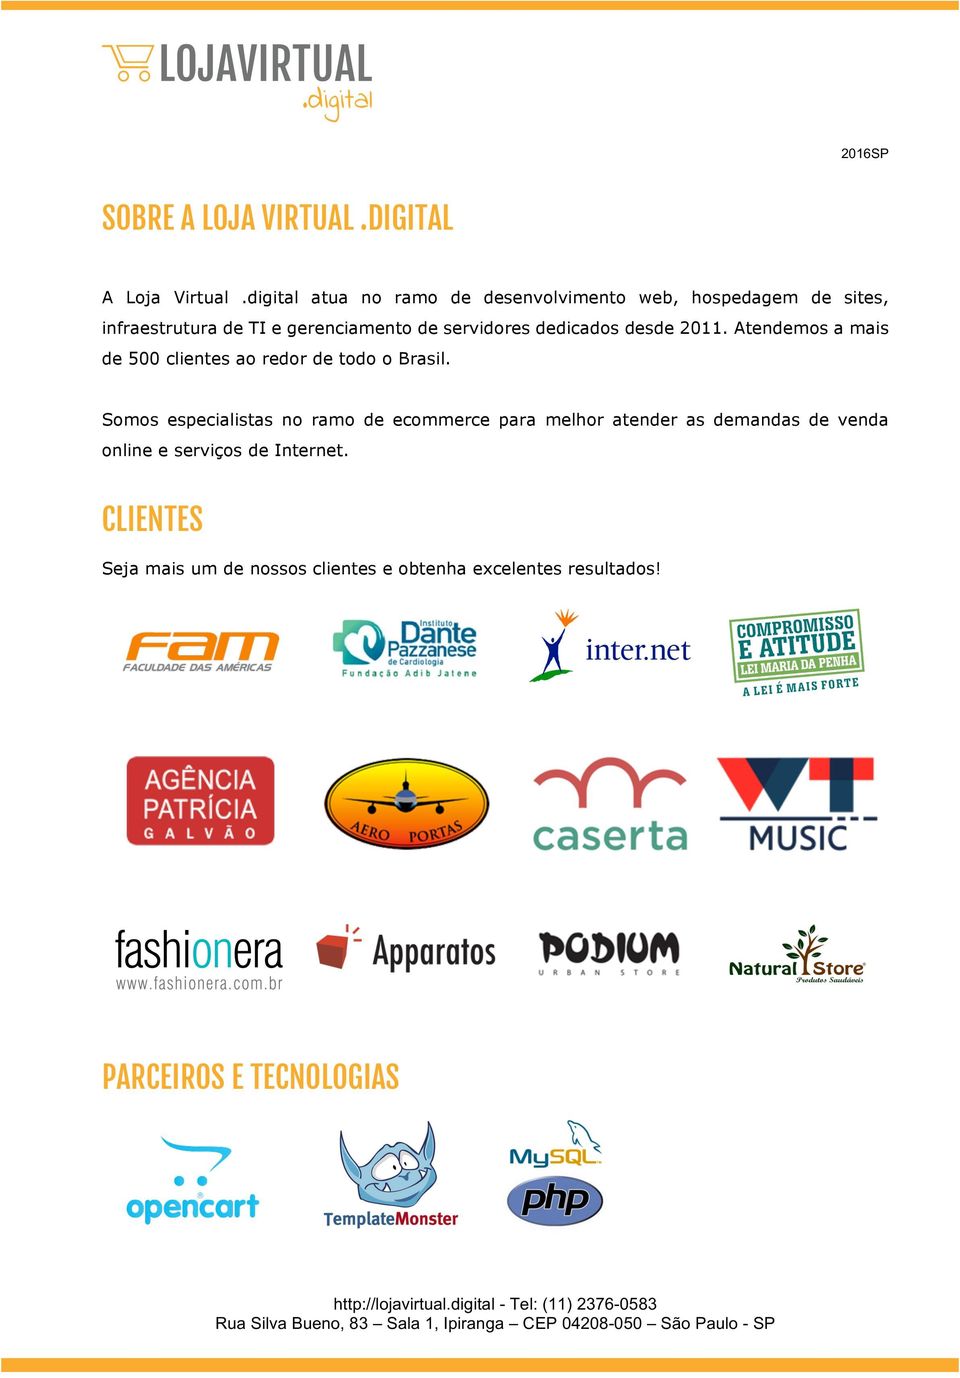 servidores dedicados desde 2011. Atendemos a mais de 500 clientes ao redor de todo o Brasil.